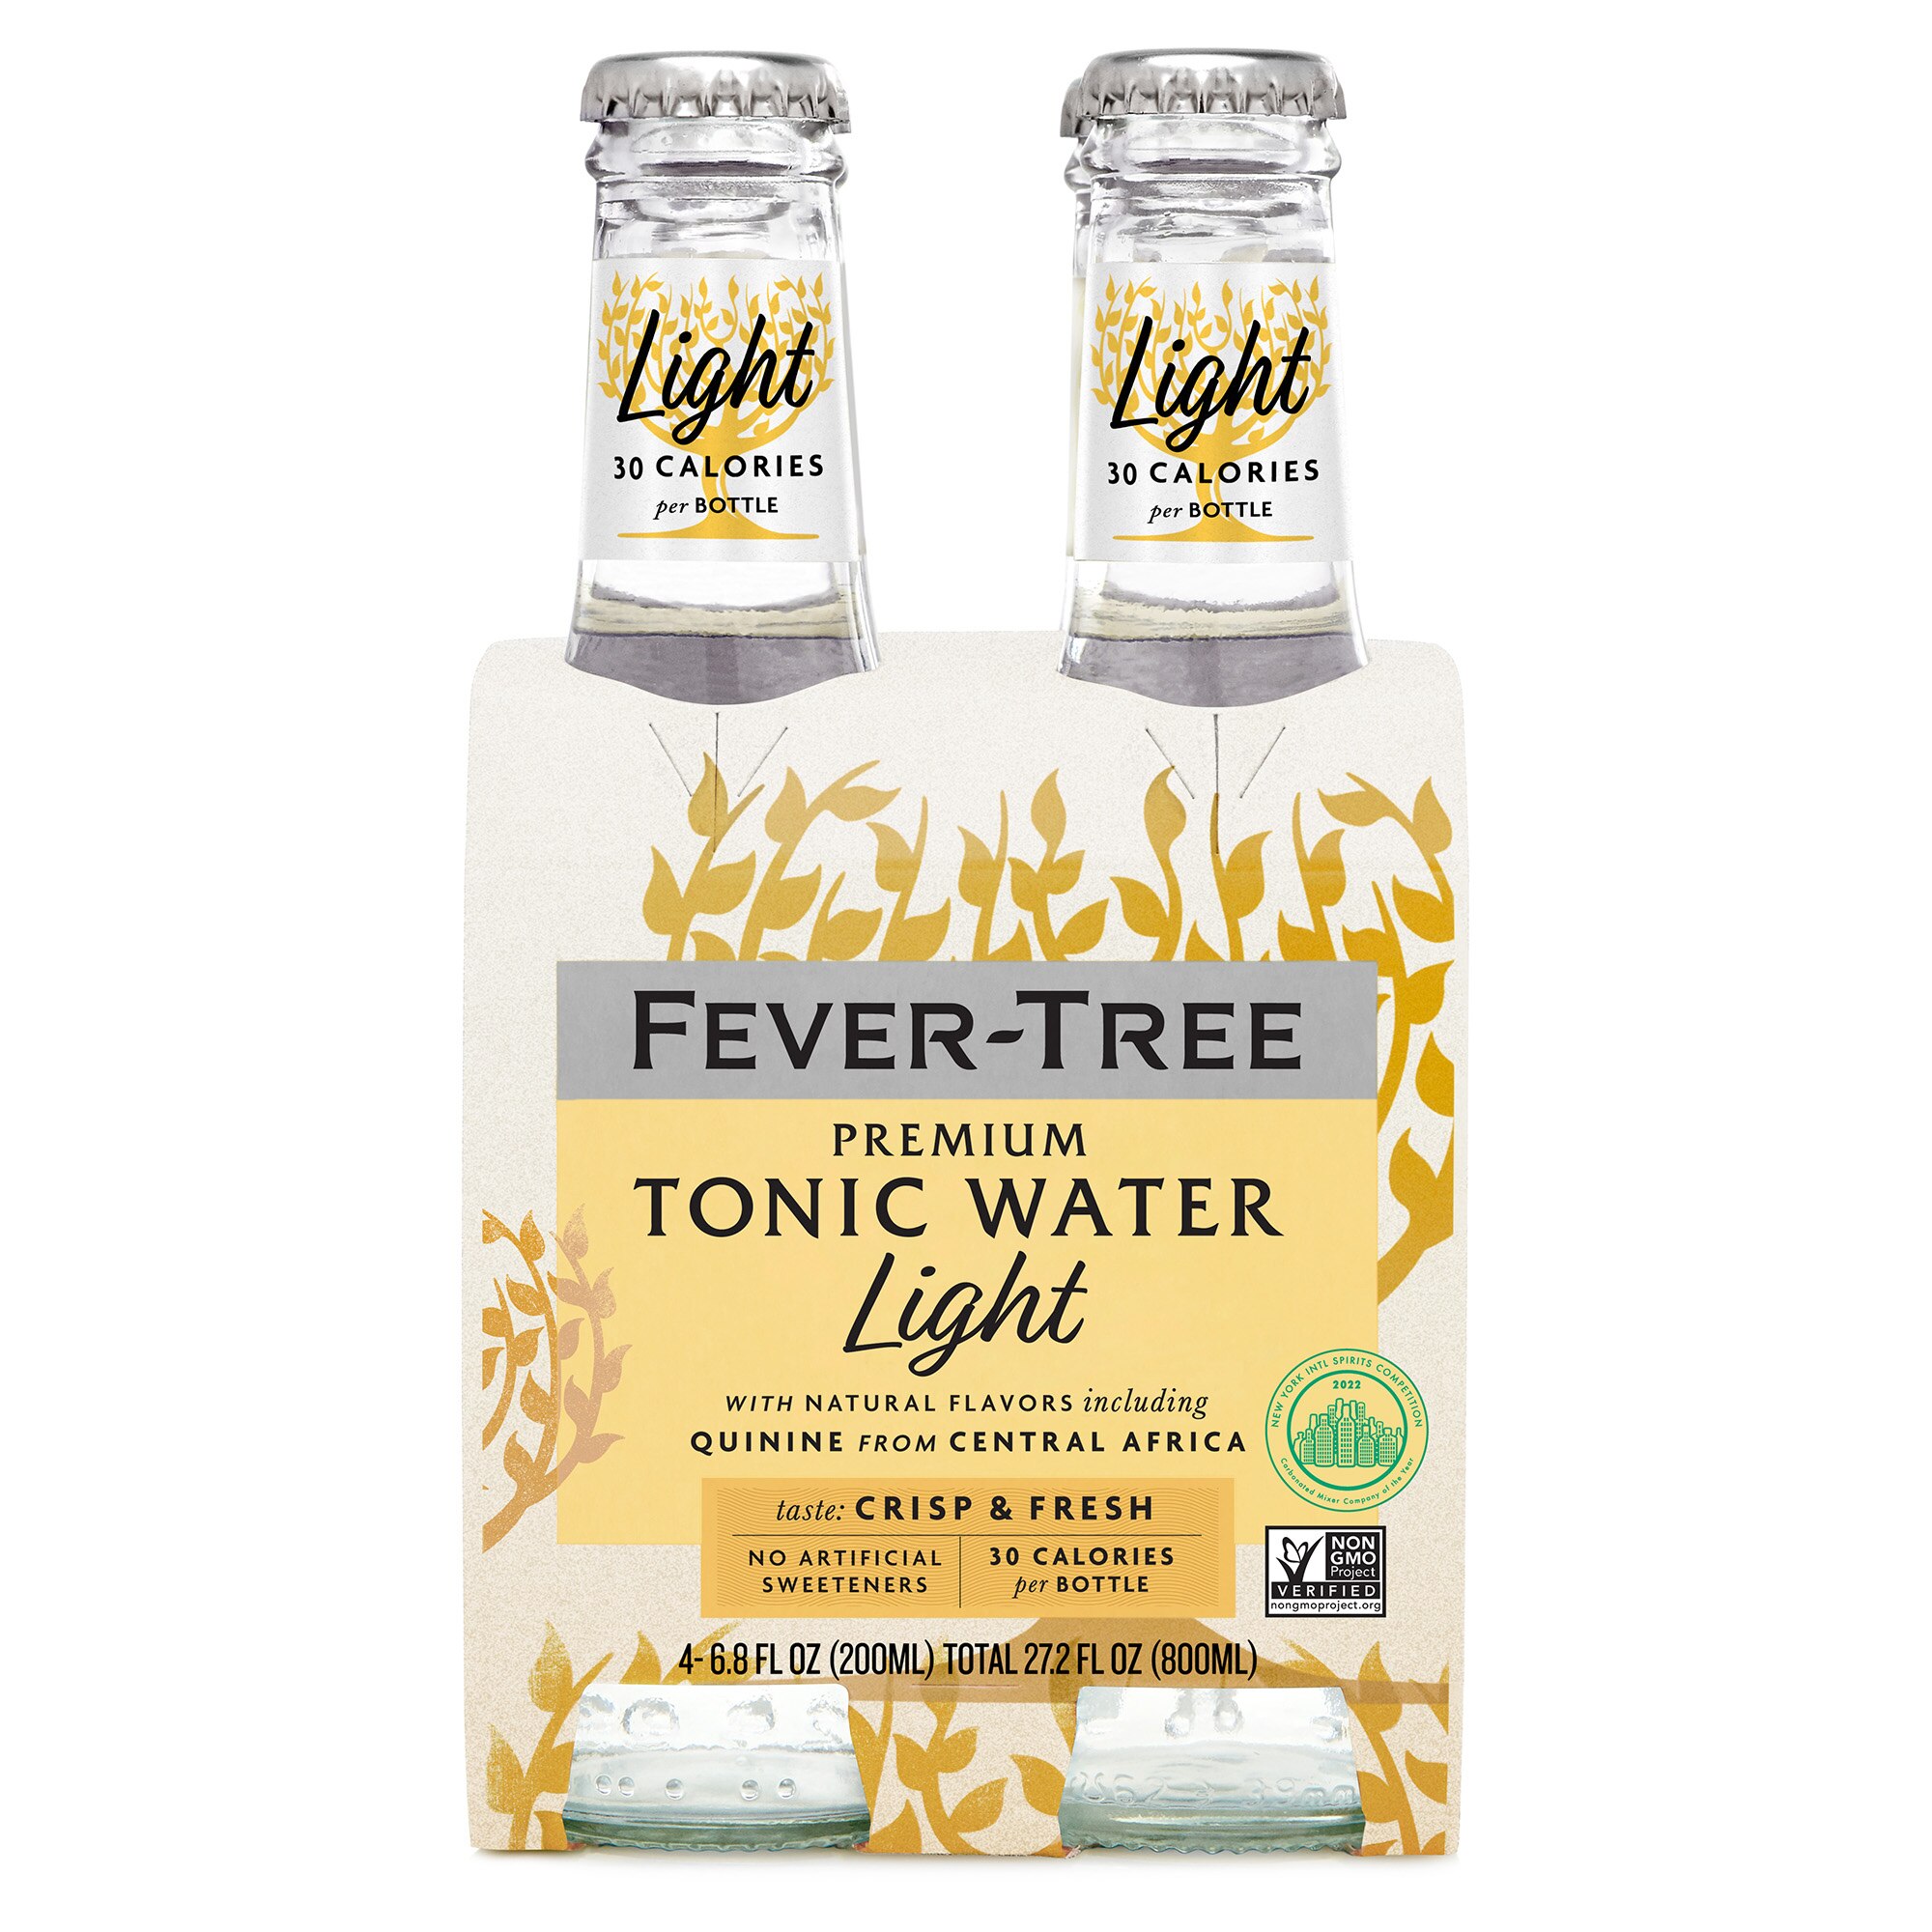 NEW: Fever-Tree Light Premium Tonic, 4 ct. 20.05 oz CVS Pharmacy